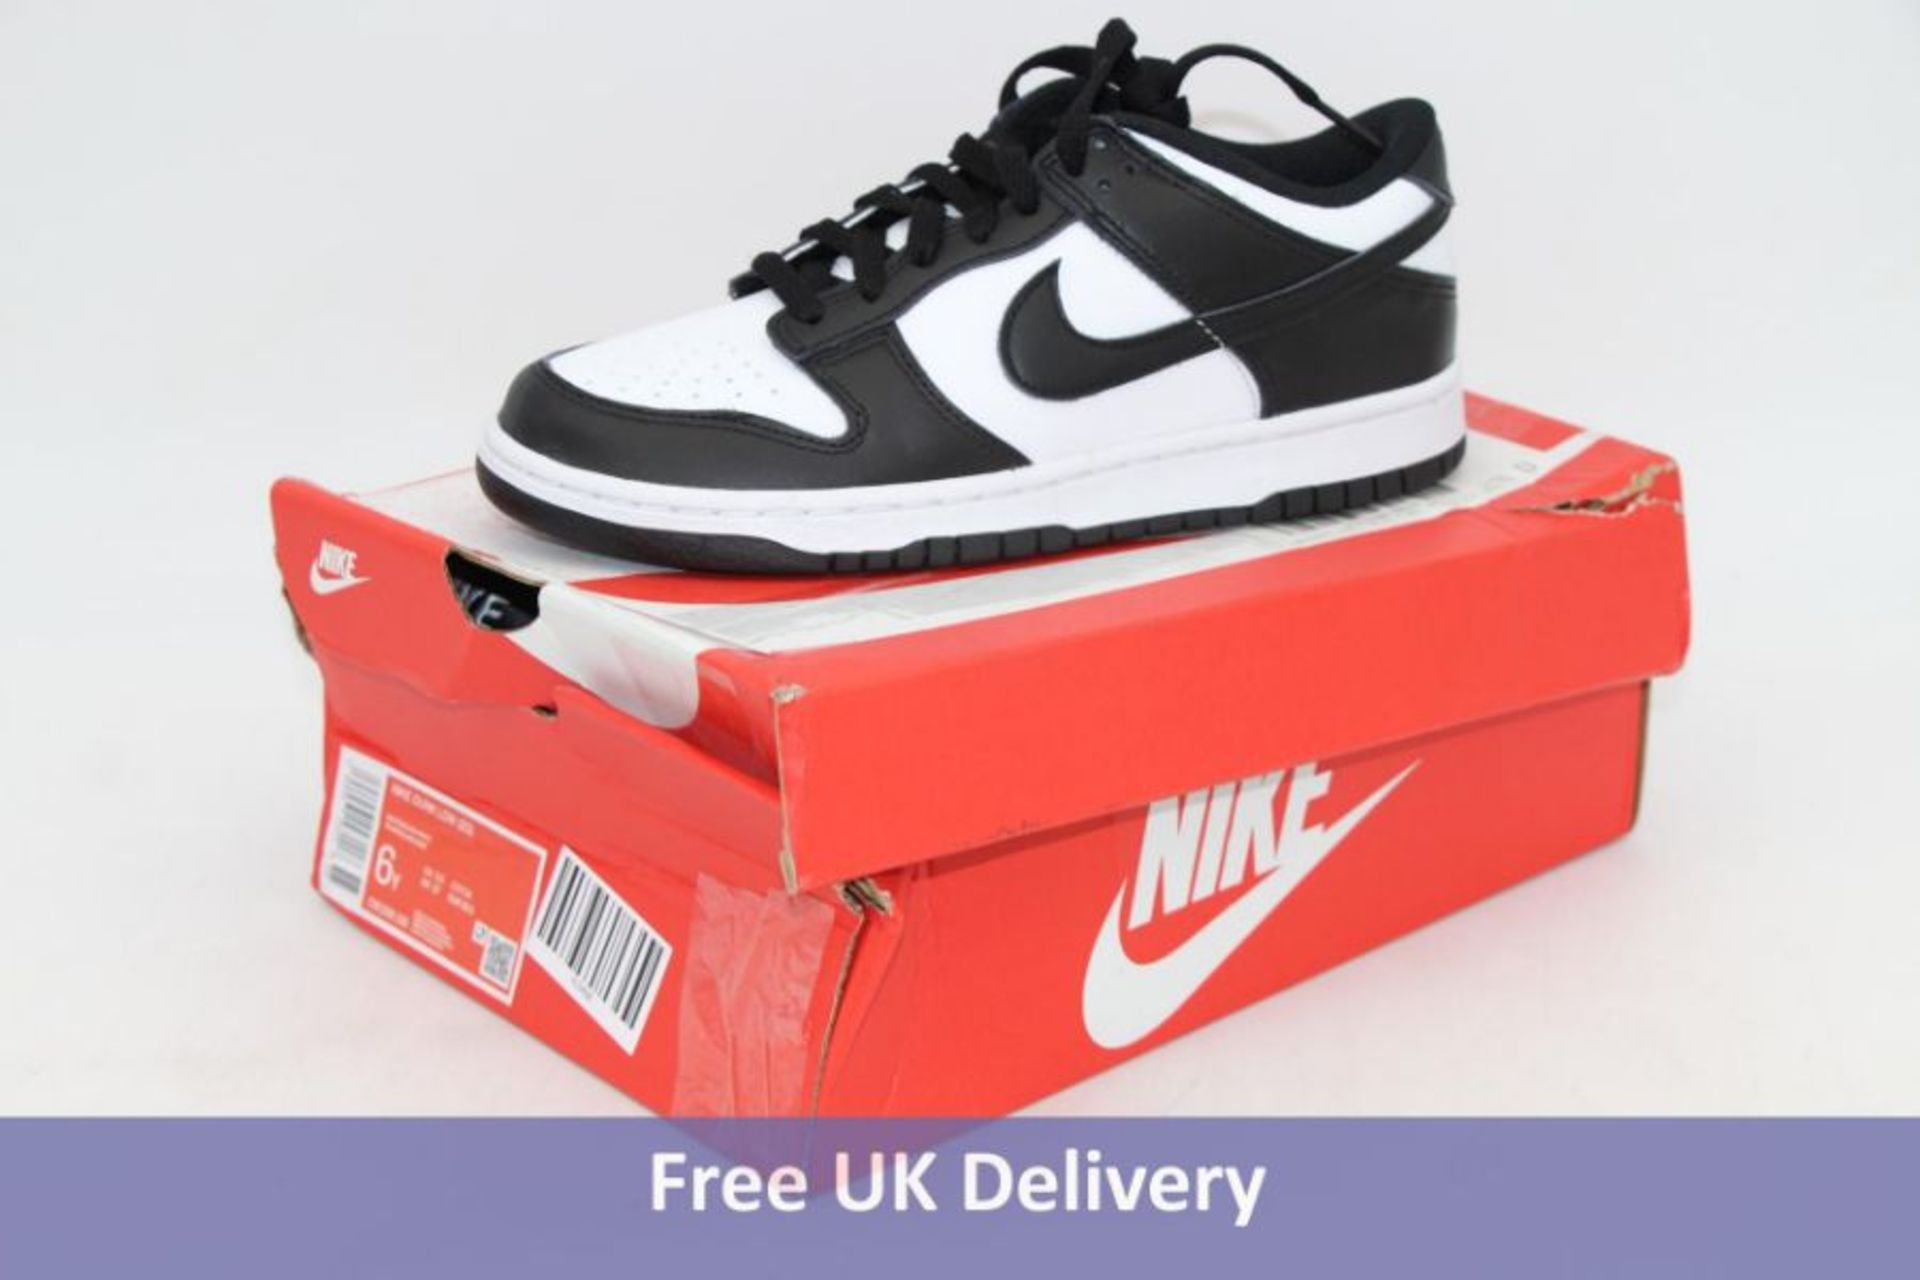 Nike Dunk Low GS, Black/White, UK 5.5. Box damaged